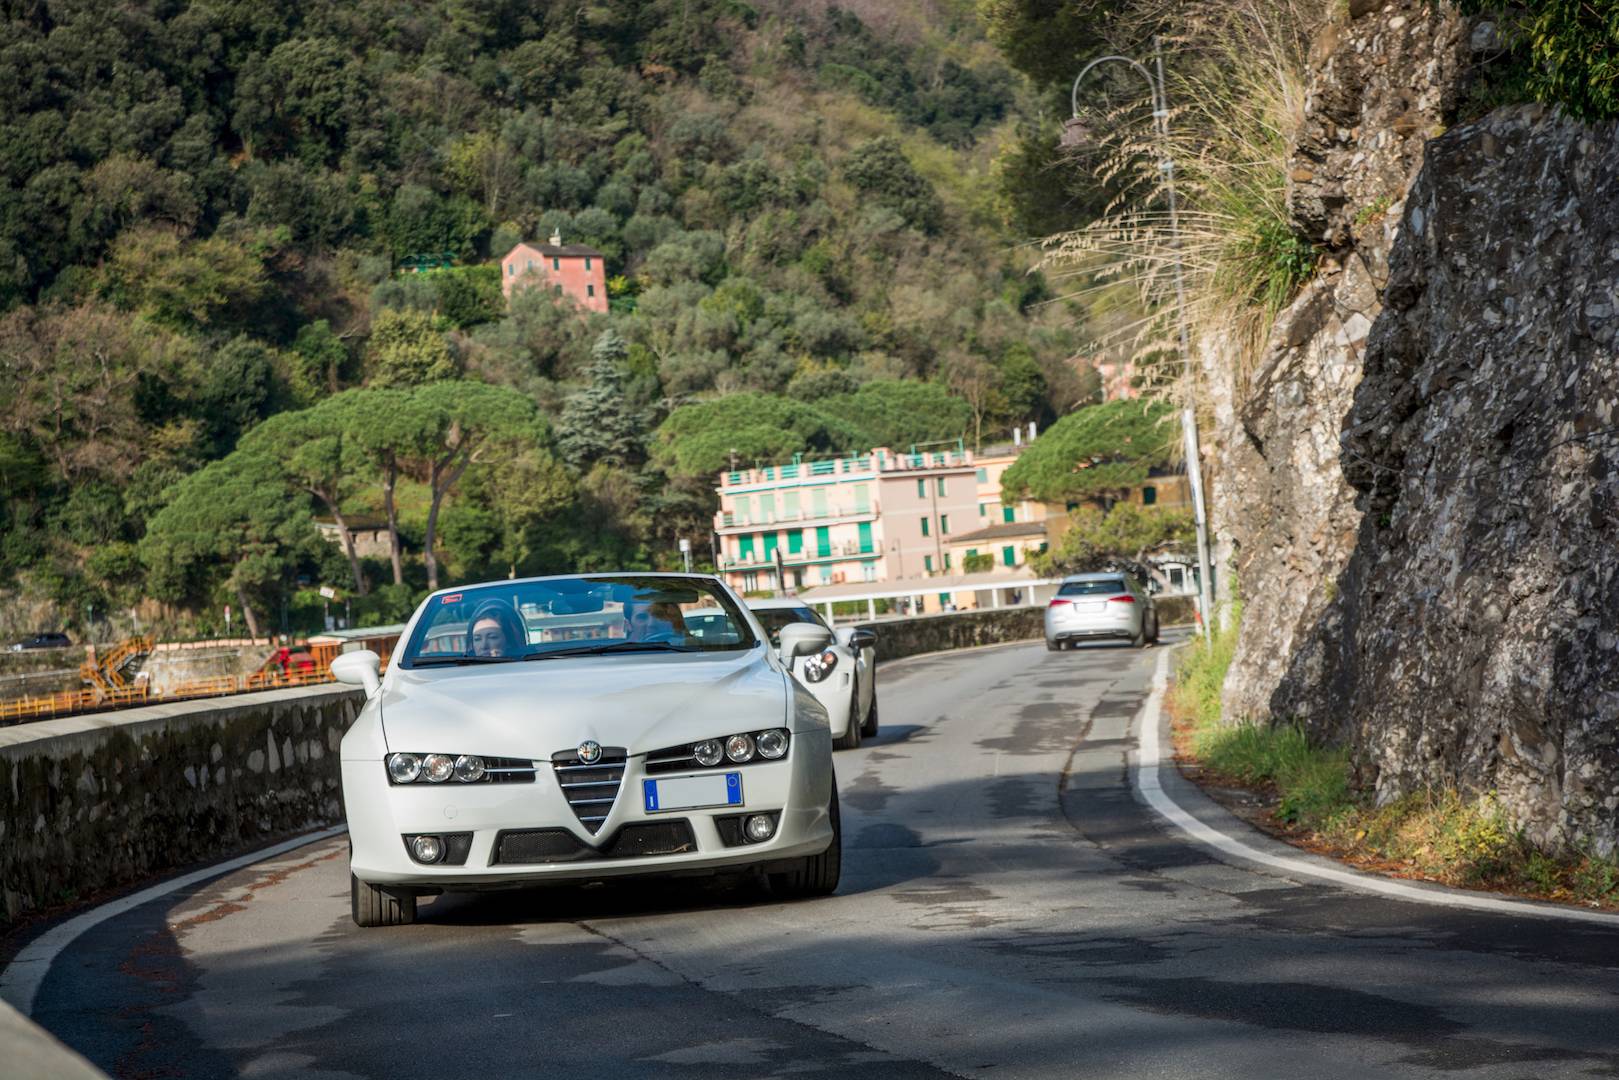 Alfa Romeo Spider Q4 - Liguria.jpg